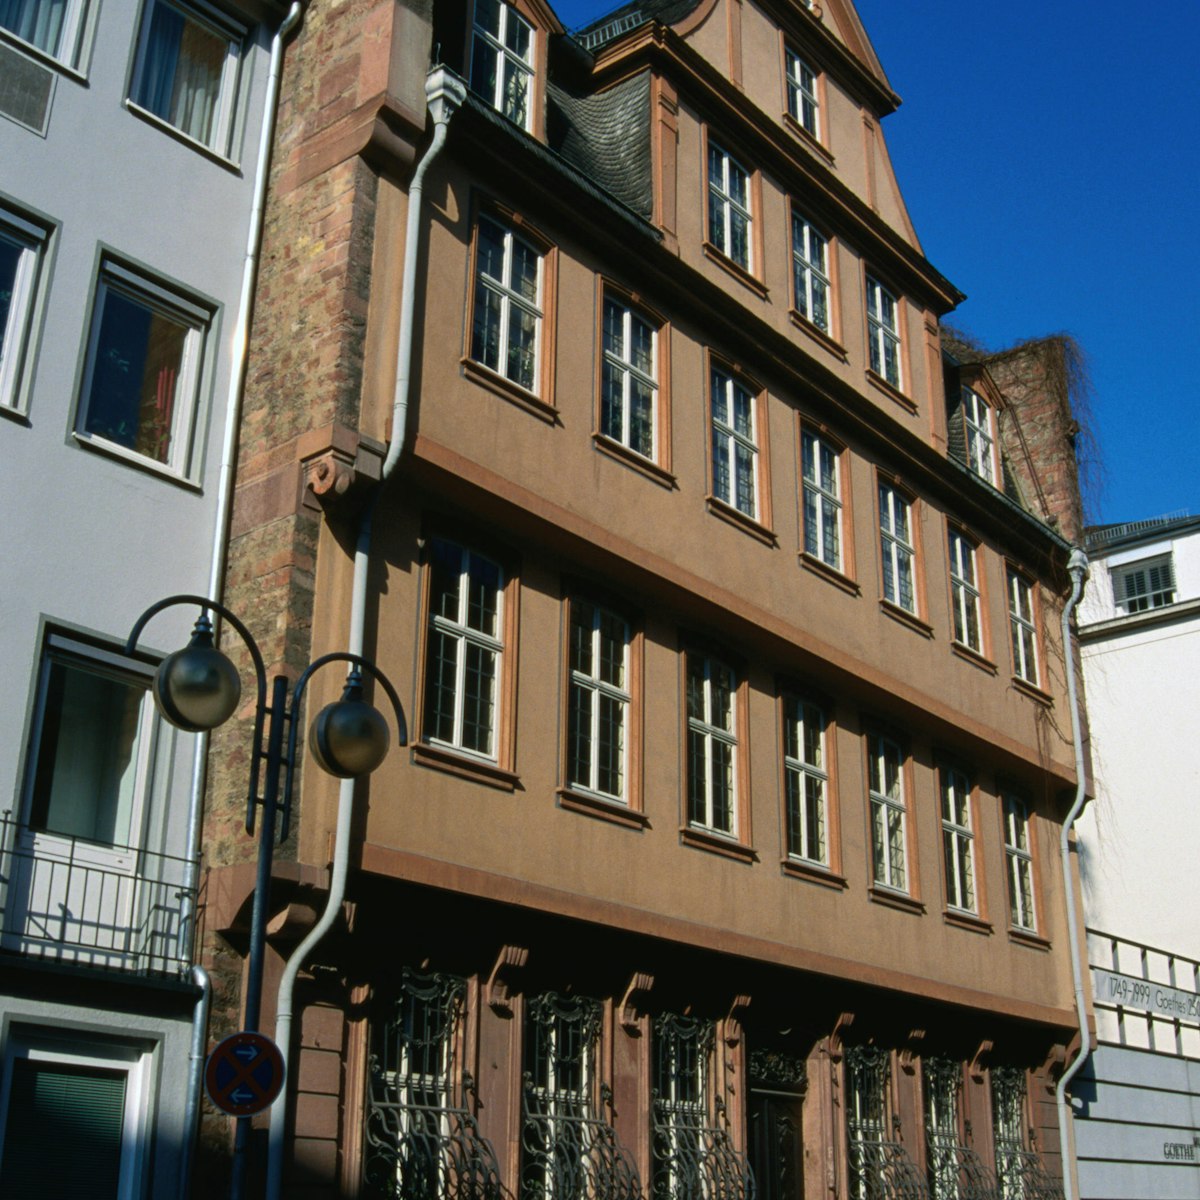 Goethe House, where Johann Wolfgang von Goethe was born in 1749 - Frankfurt, Hesse